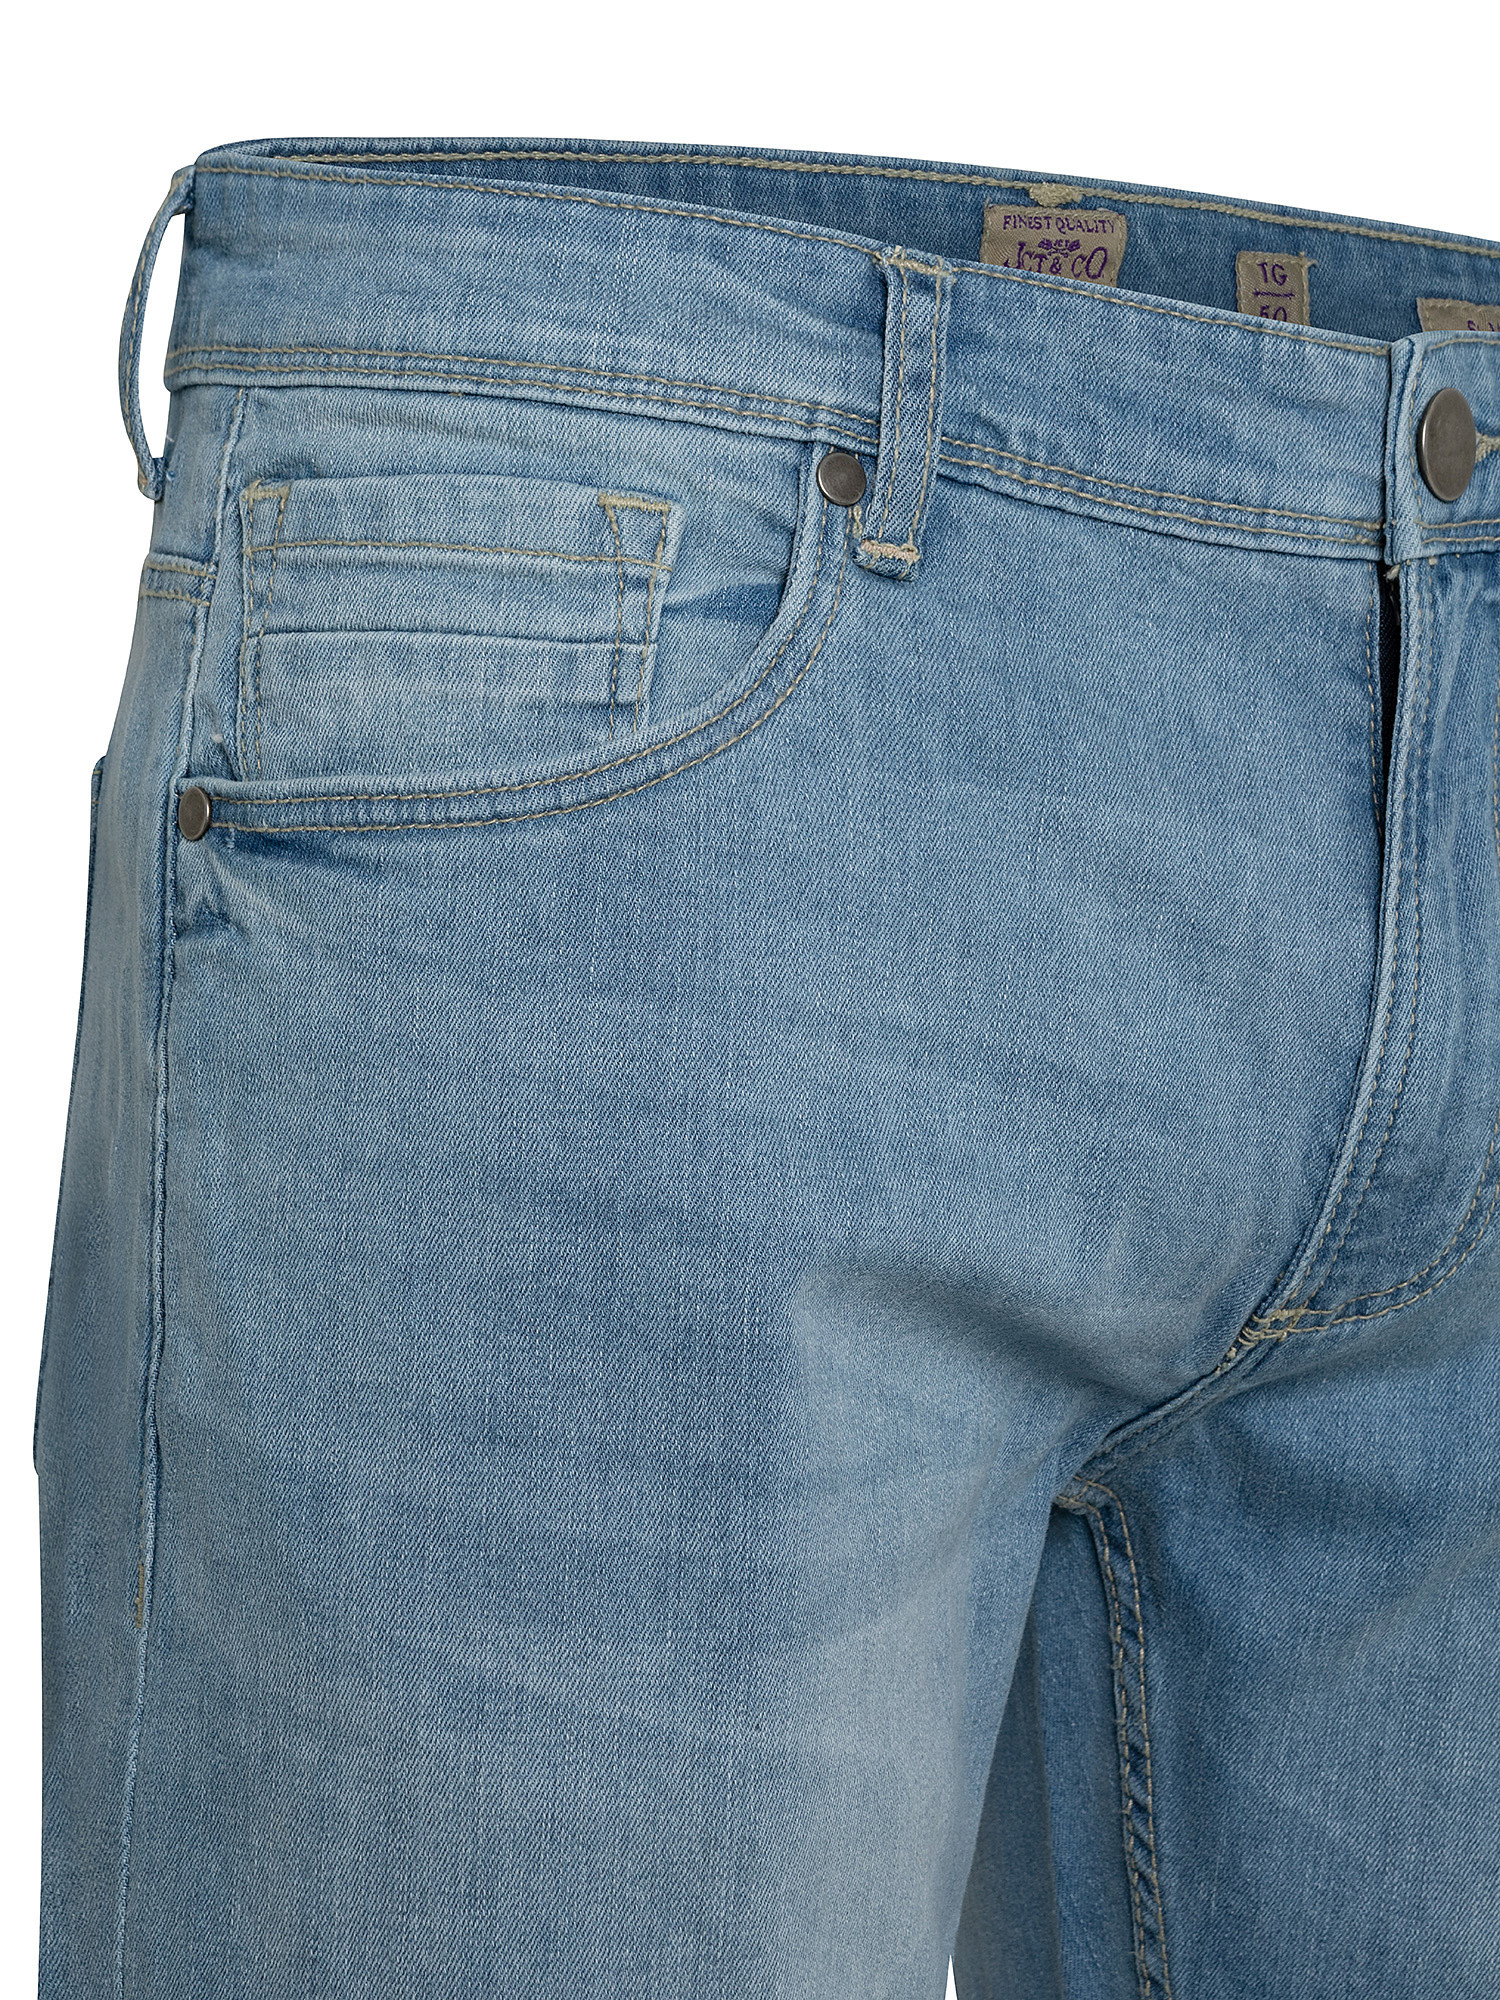 Jeans 5 tasche slim cotone leggero stretch, Blu chiaro, large image number 2